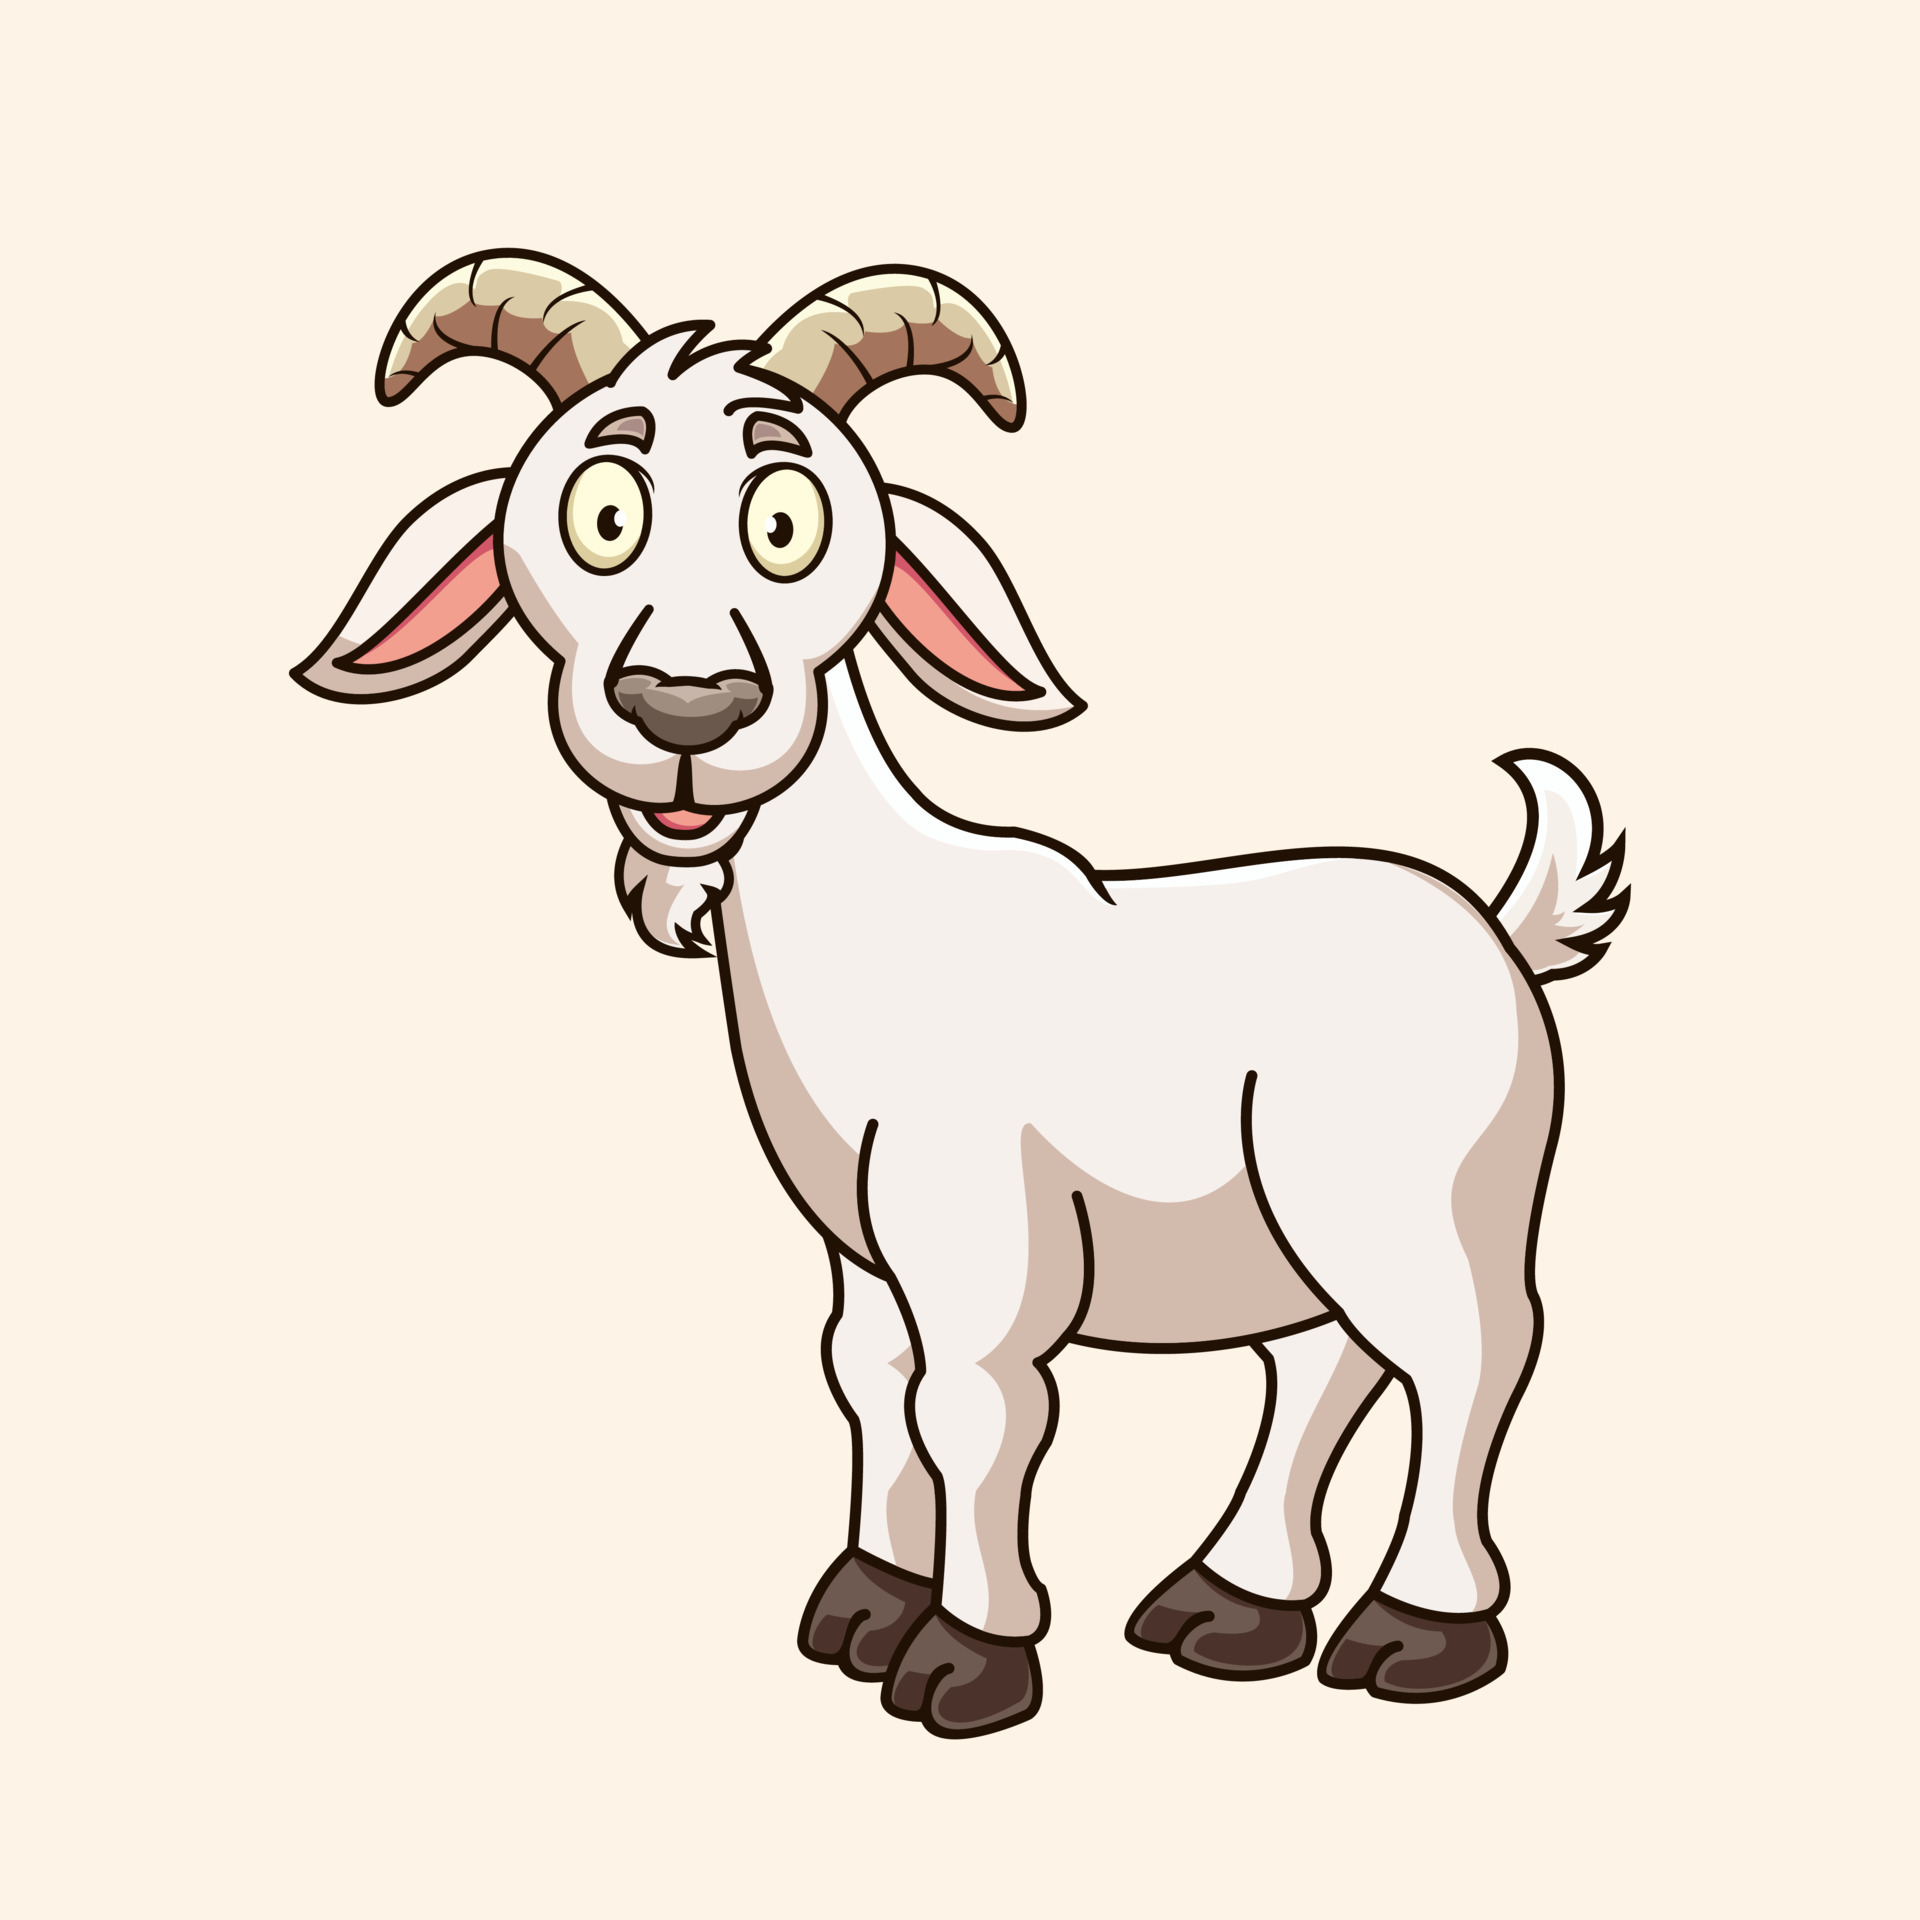 Cute goat cartoon premium vector 8255576 Vector Art at Vecteezy